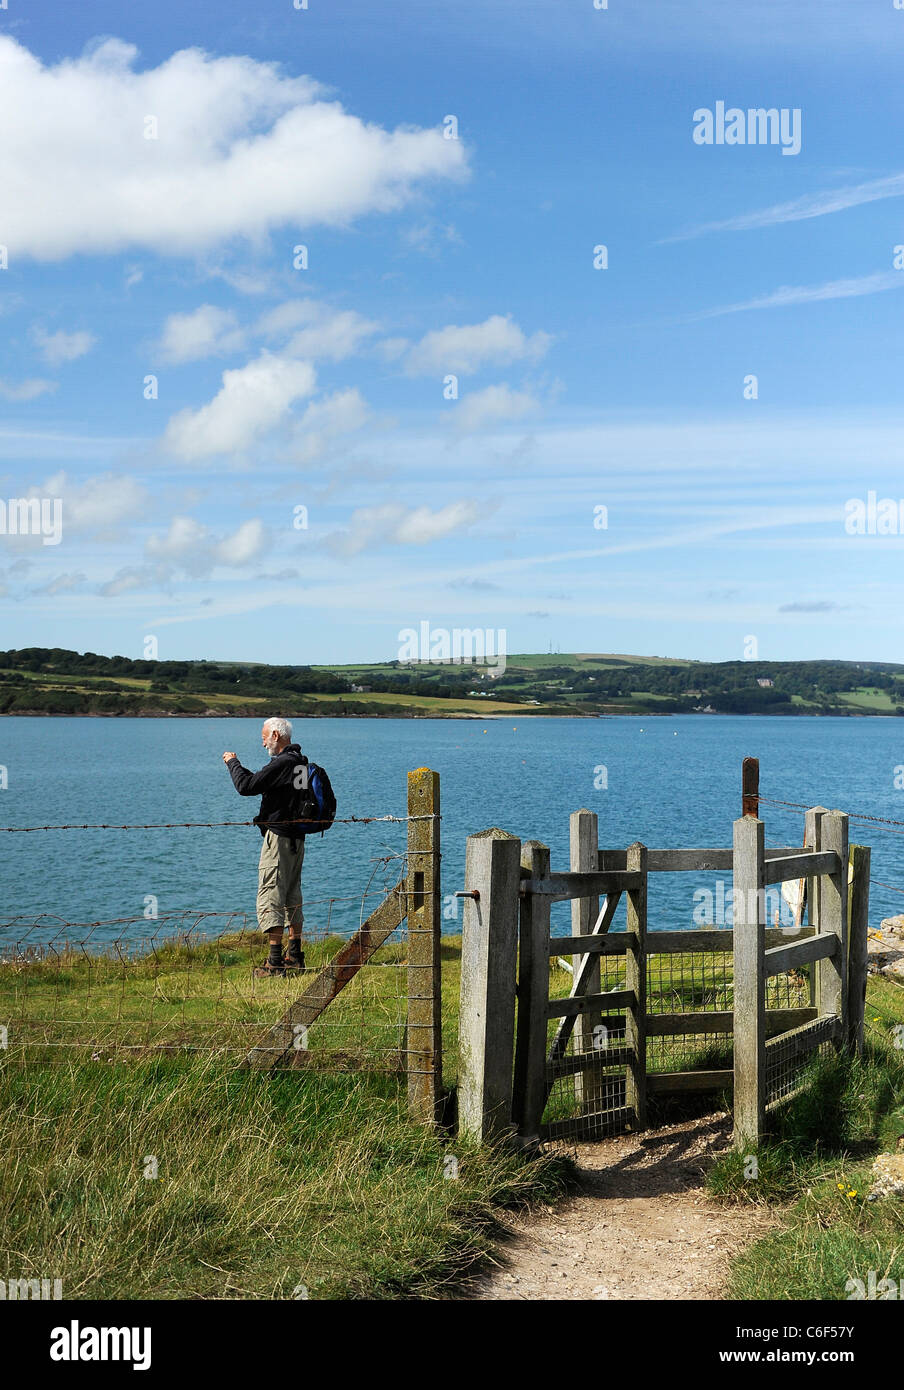 Rambler in Anglesey fotografiert schöne Küsten Szene Stockfoto